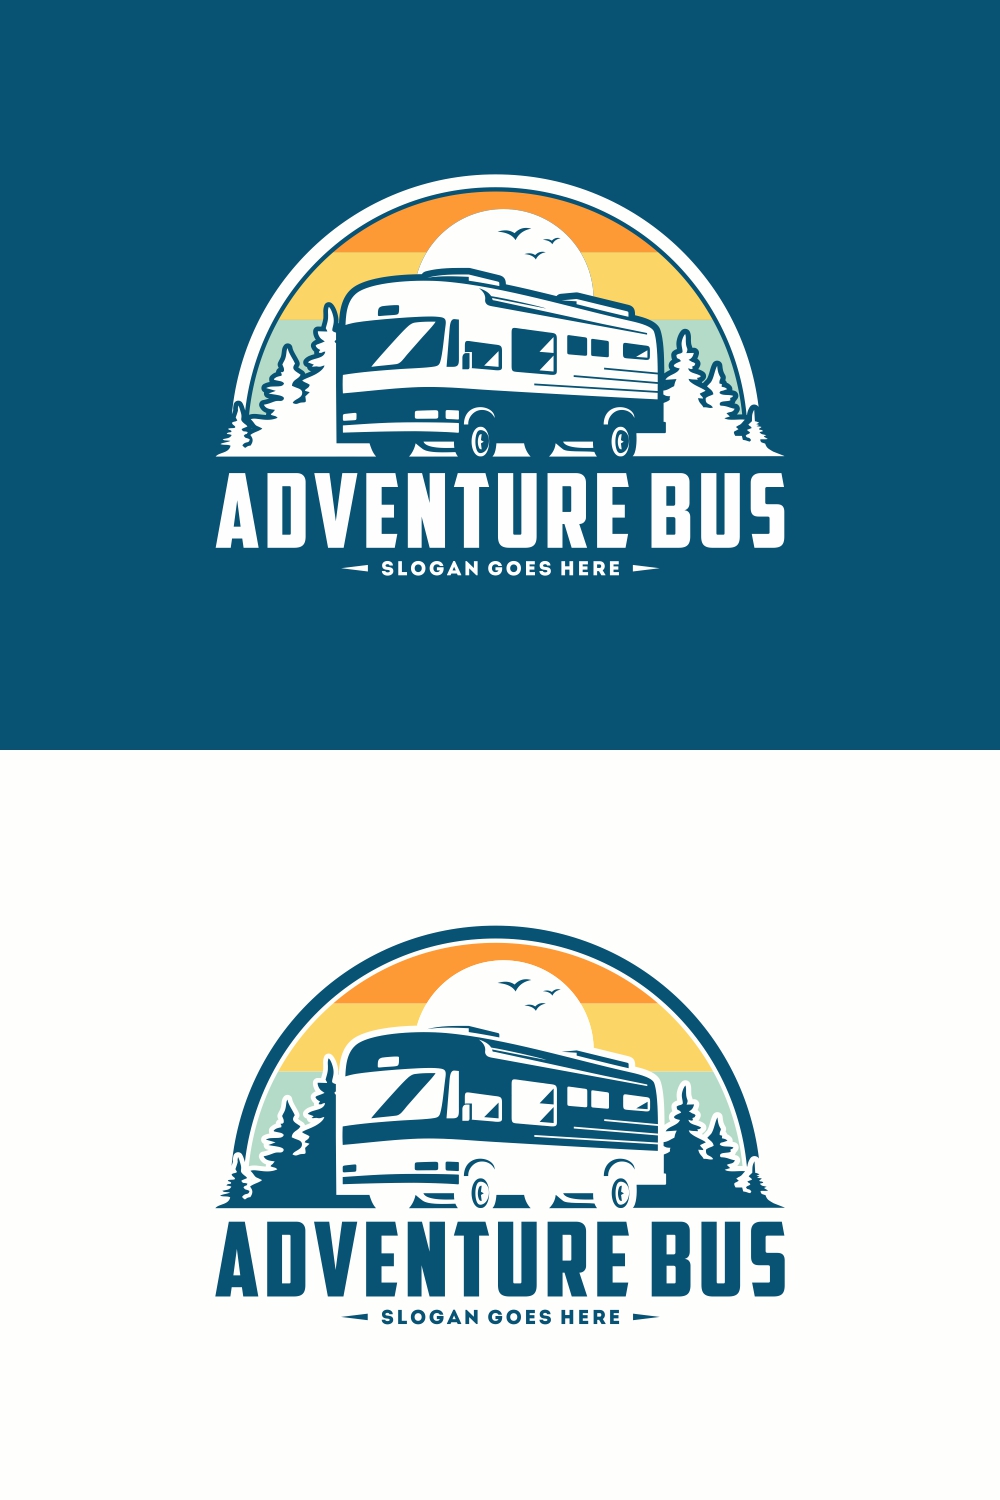 Adventure Bus logo design - only 8$ pinterest preview image.